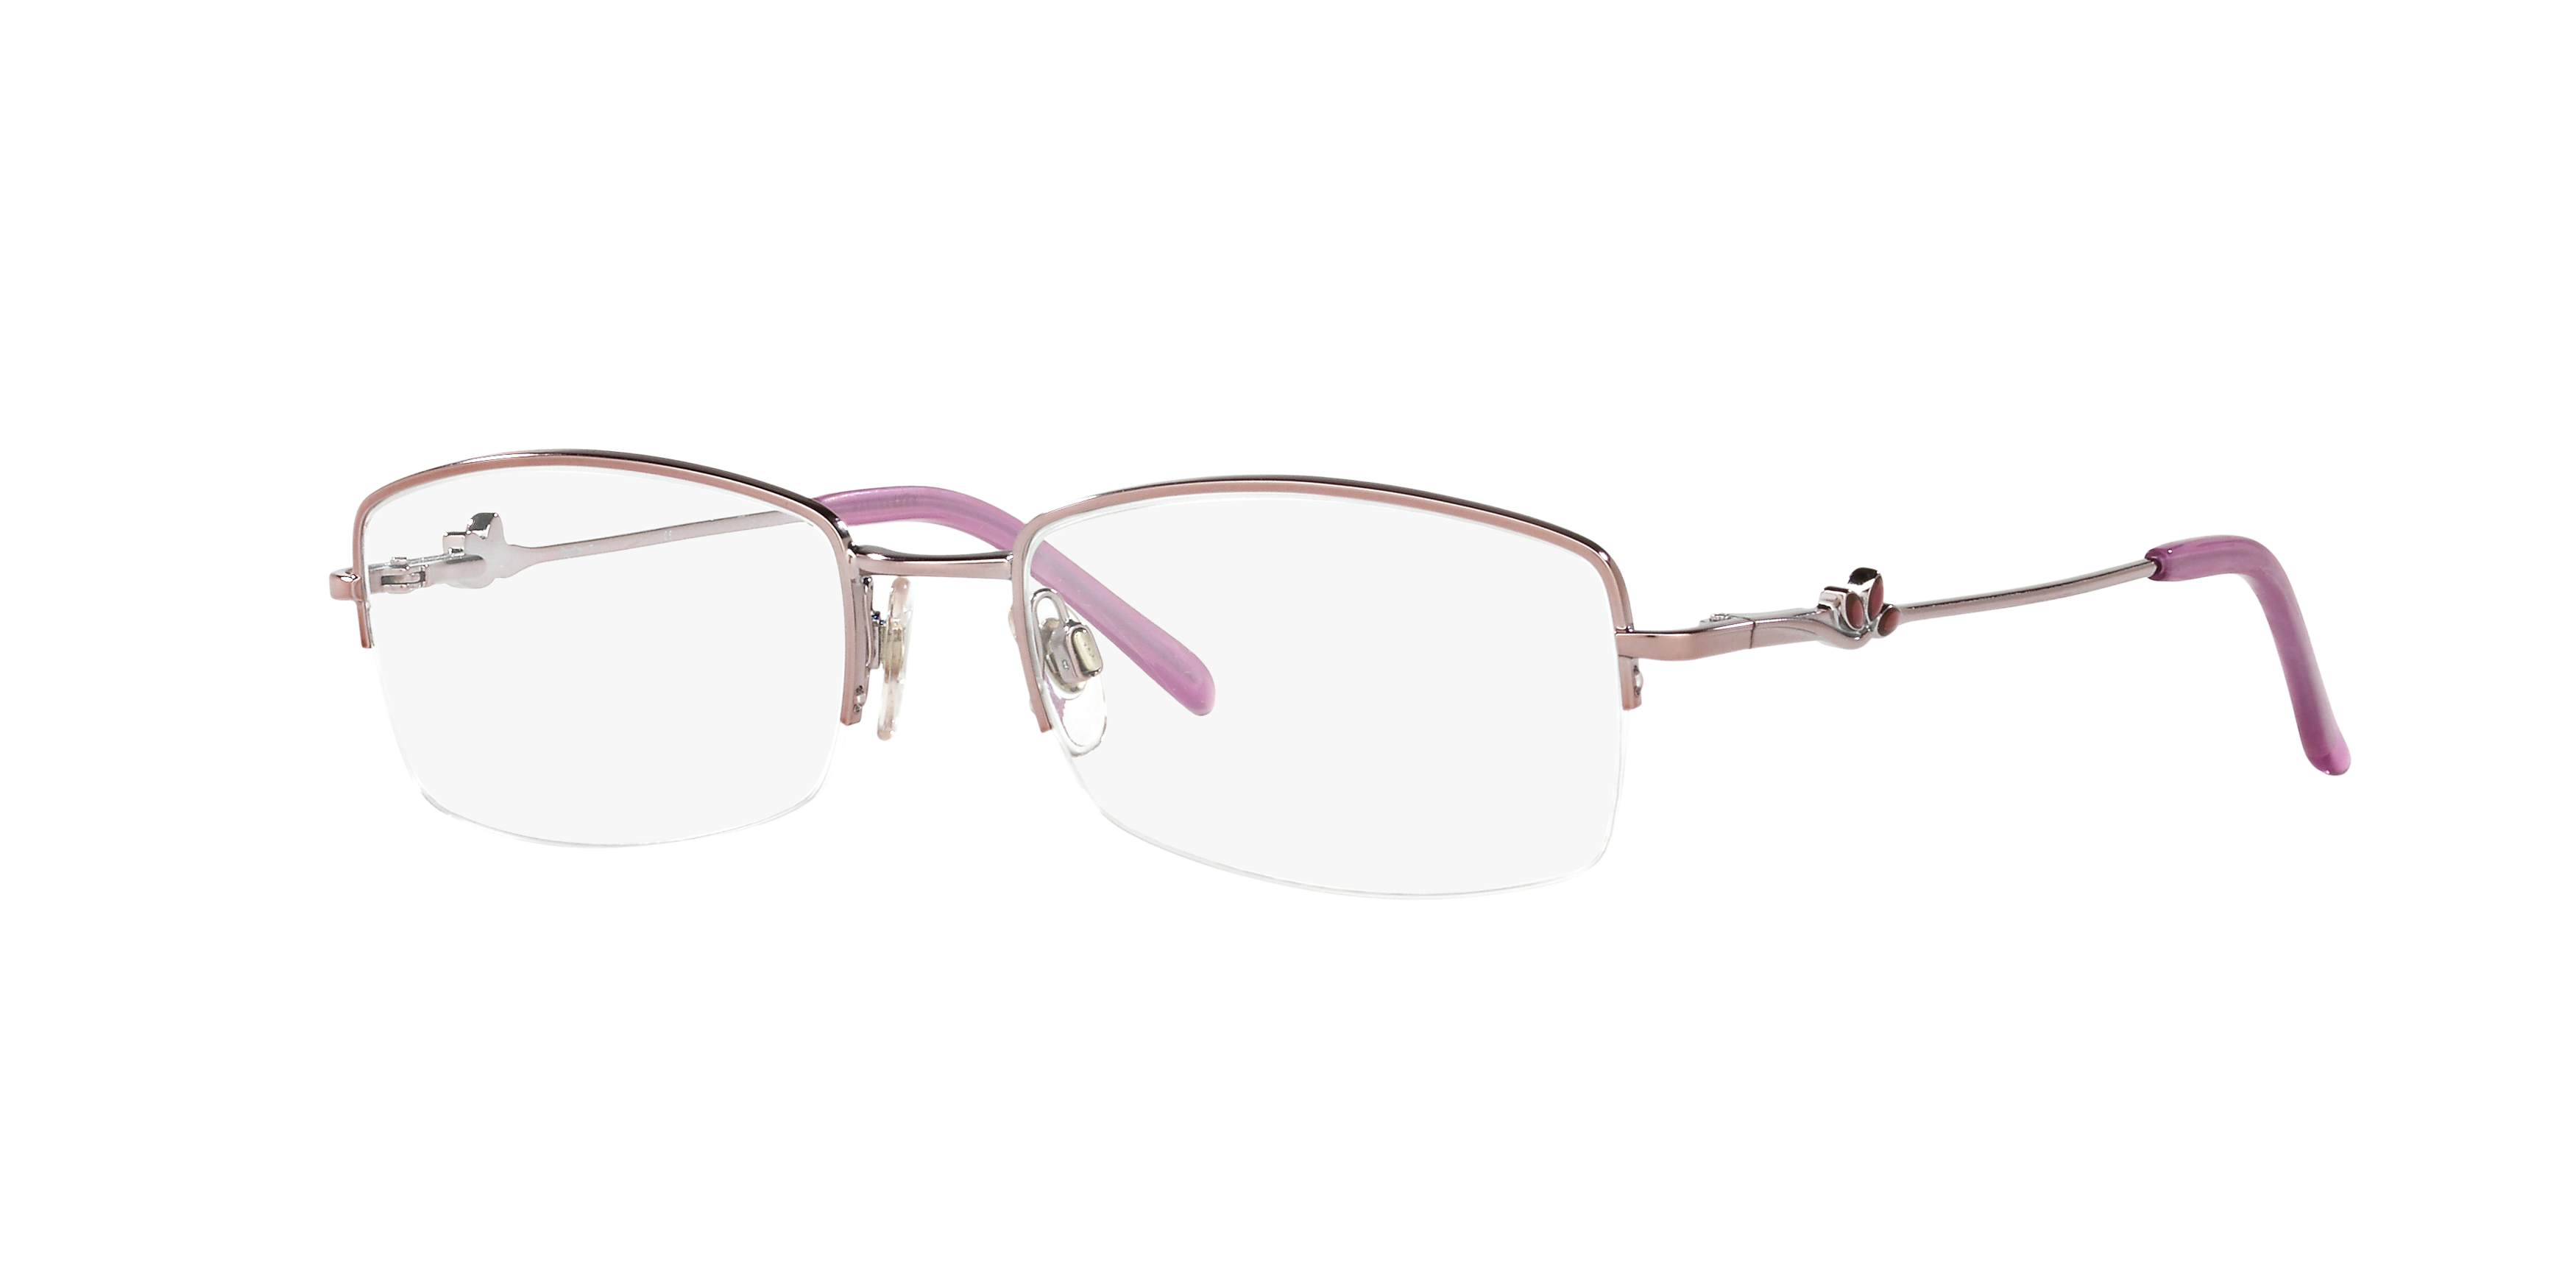 Angle_Left01 Sferoflex SF 2553 Glasses Transparent / Pink